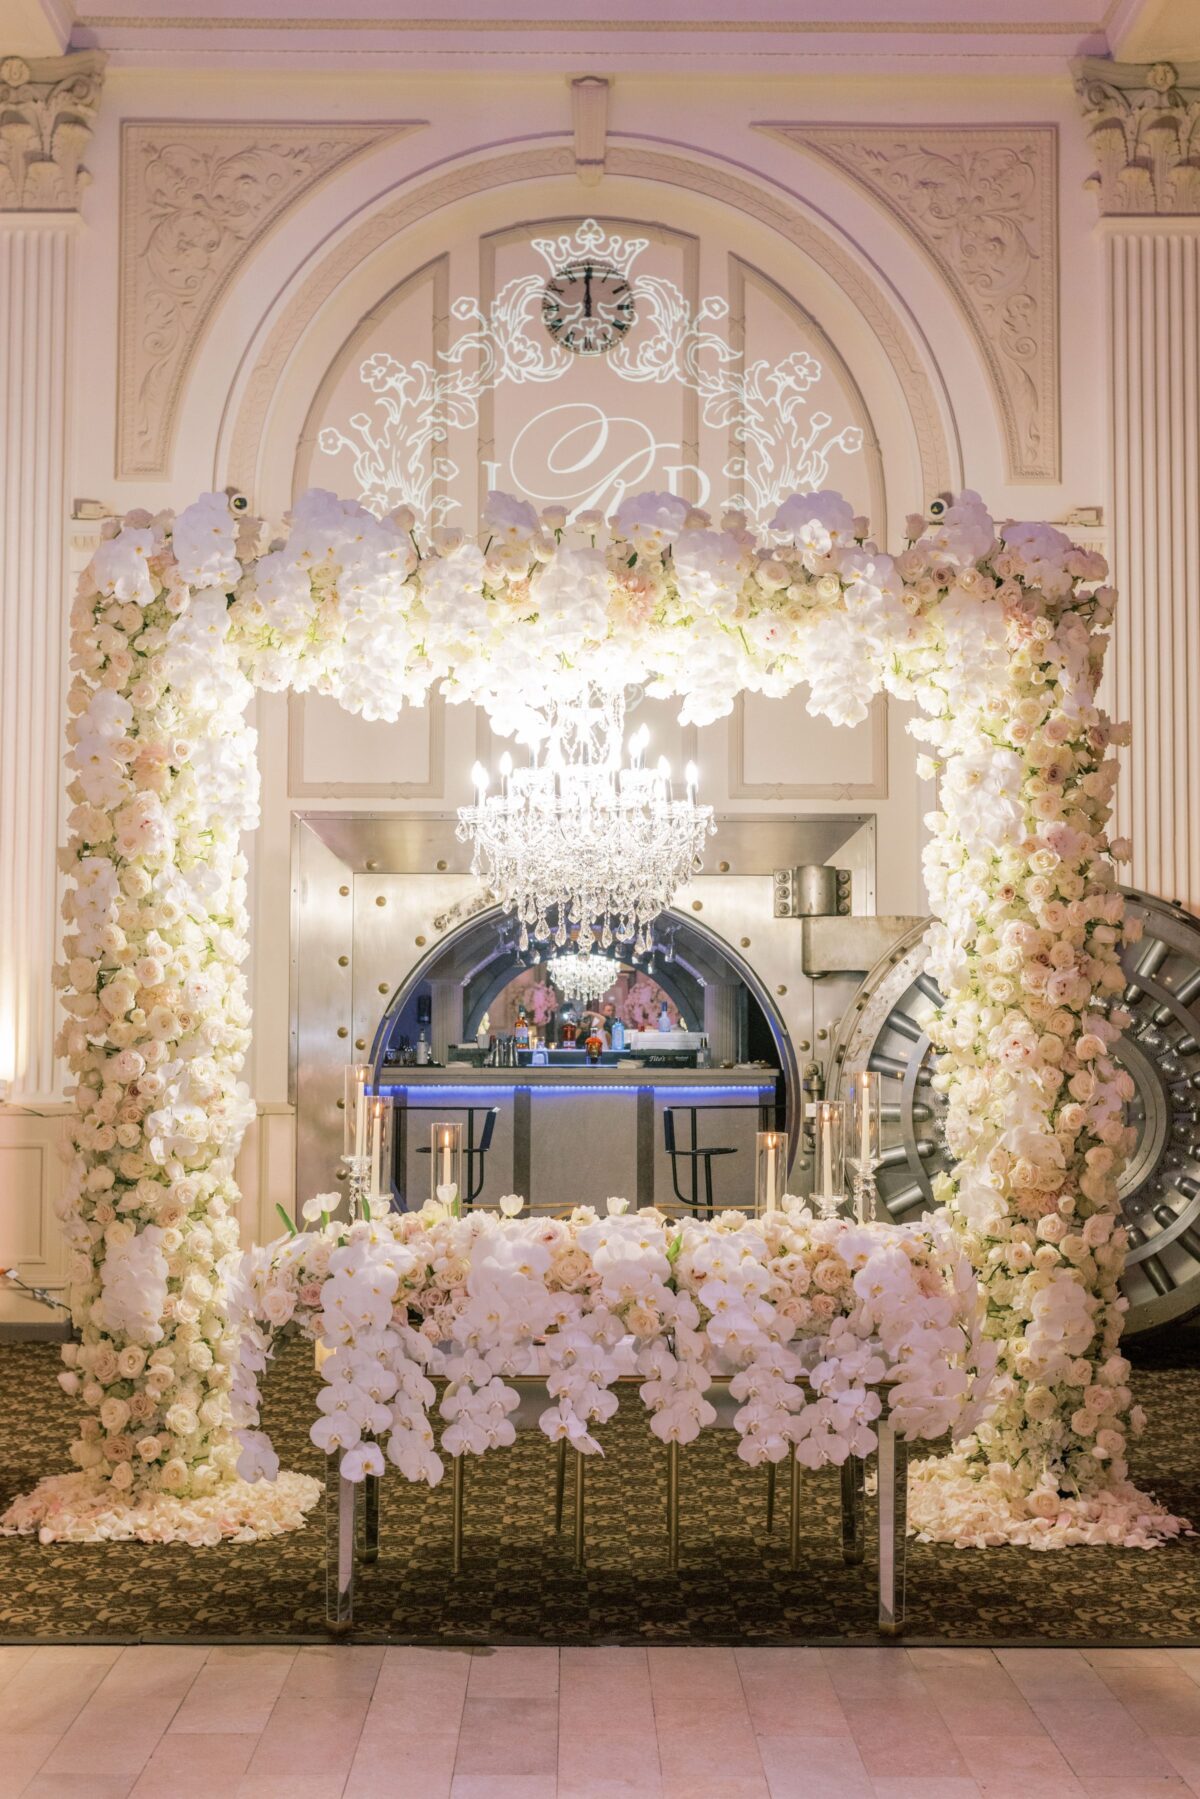 Sweetheart wedding table decor with floral archLuxury Latinx wedding - Photography: Brooke Images